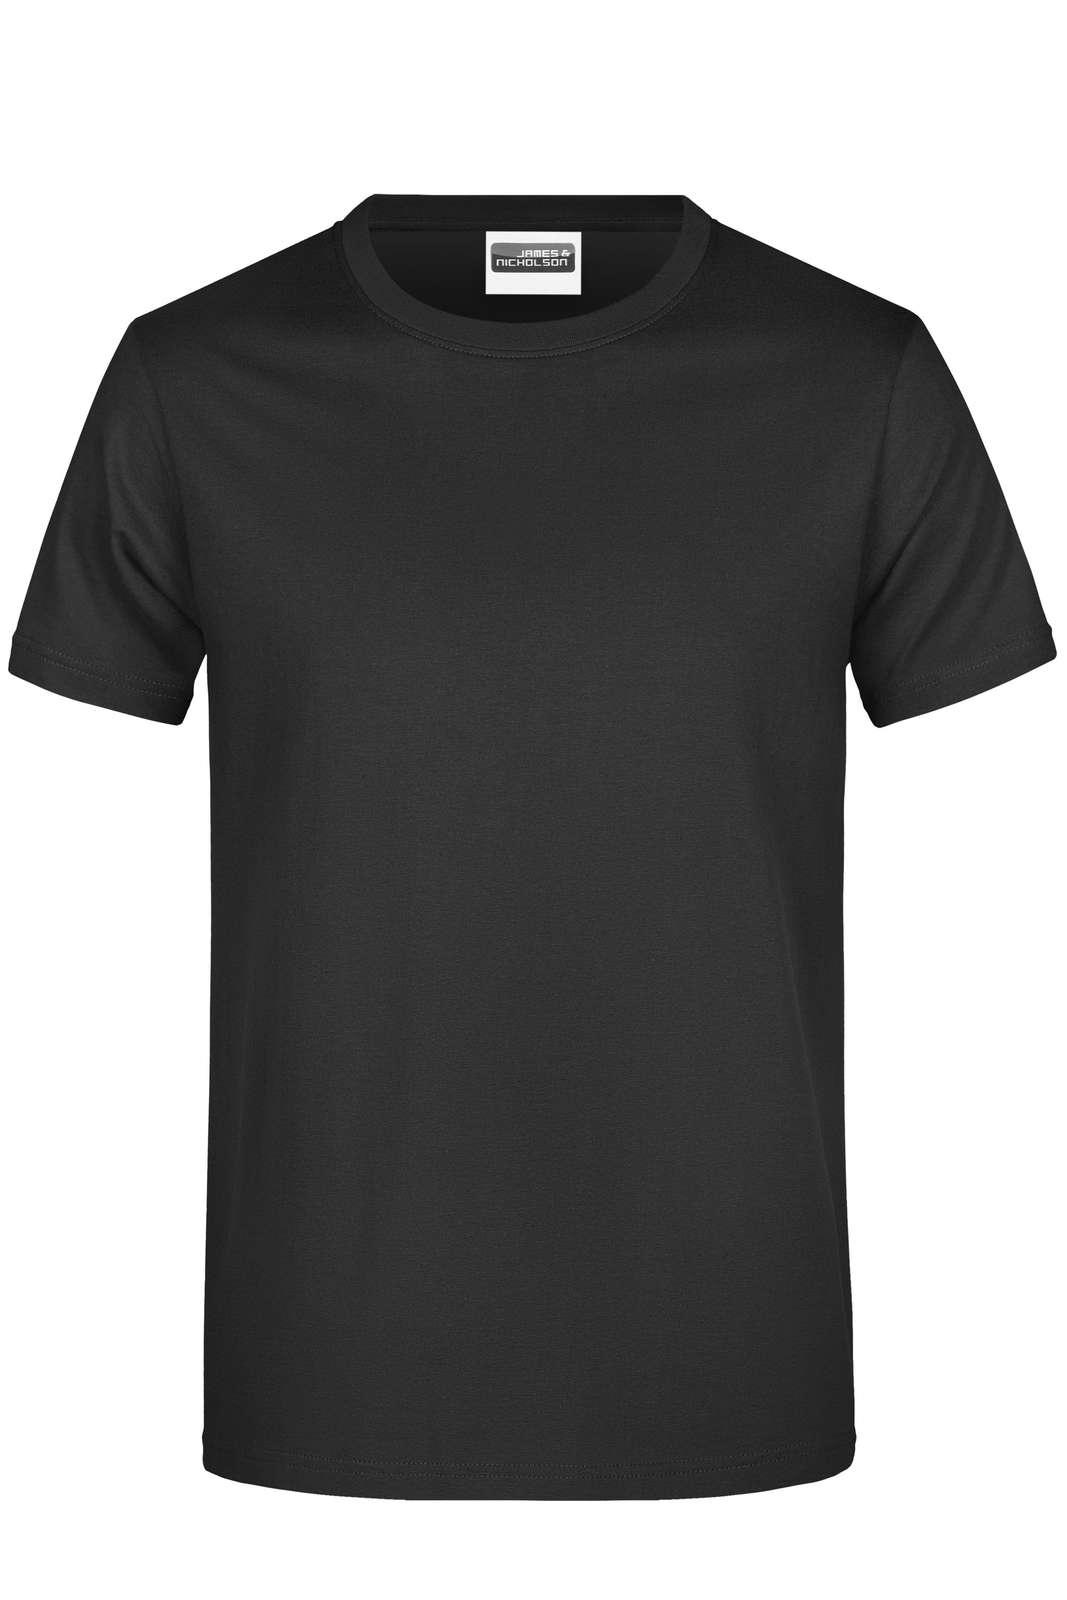 J&N PROMO-T MAN 150 - T-Shirt - JA Profil 